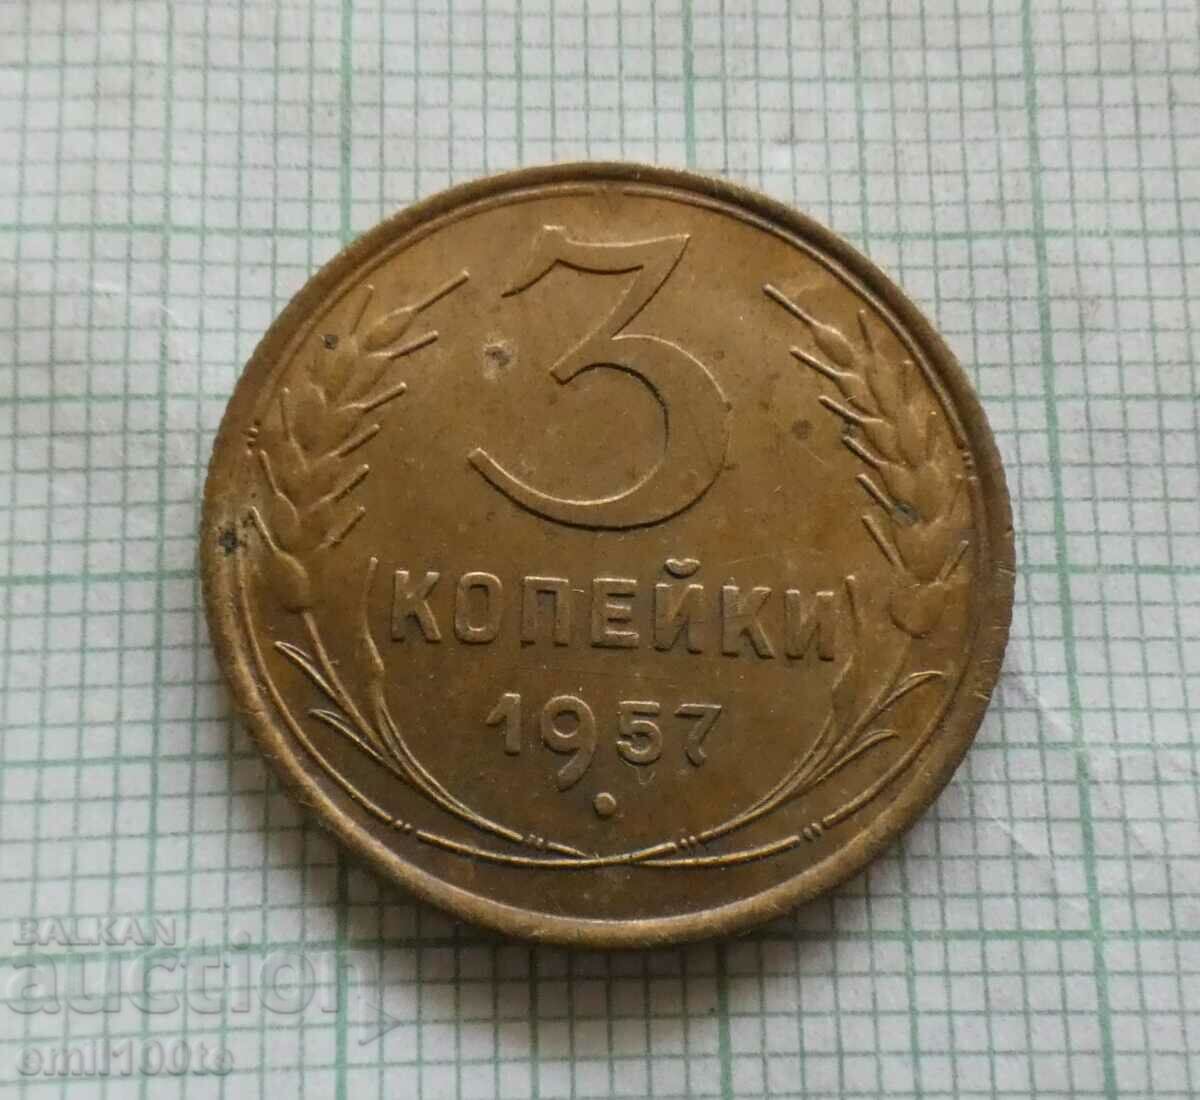 3 kopecks 1957 USSR - Russia